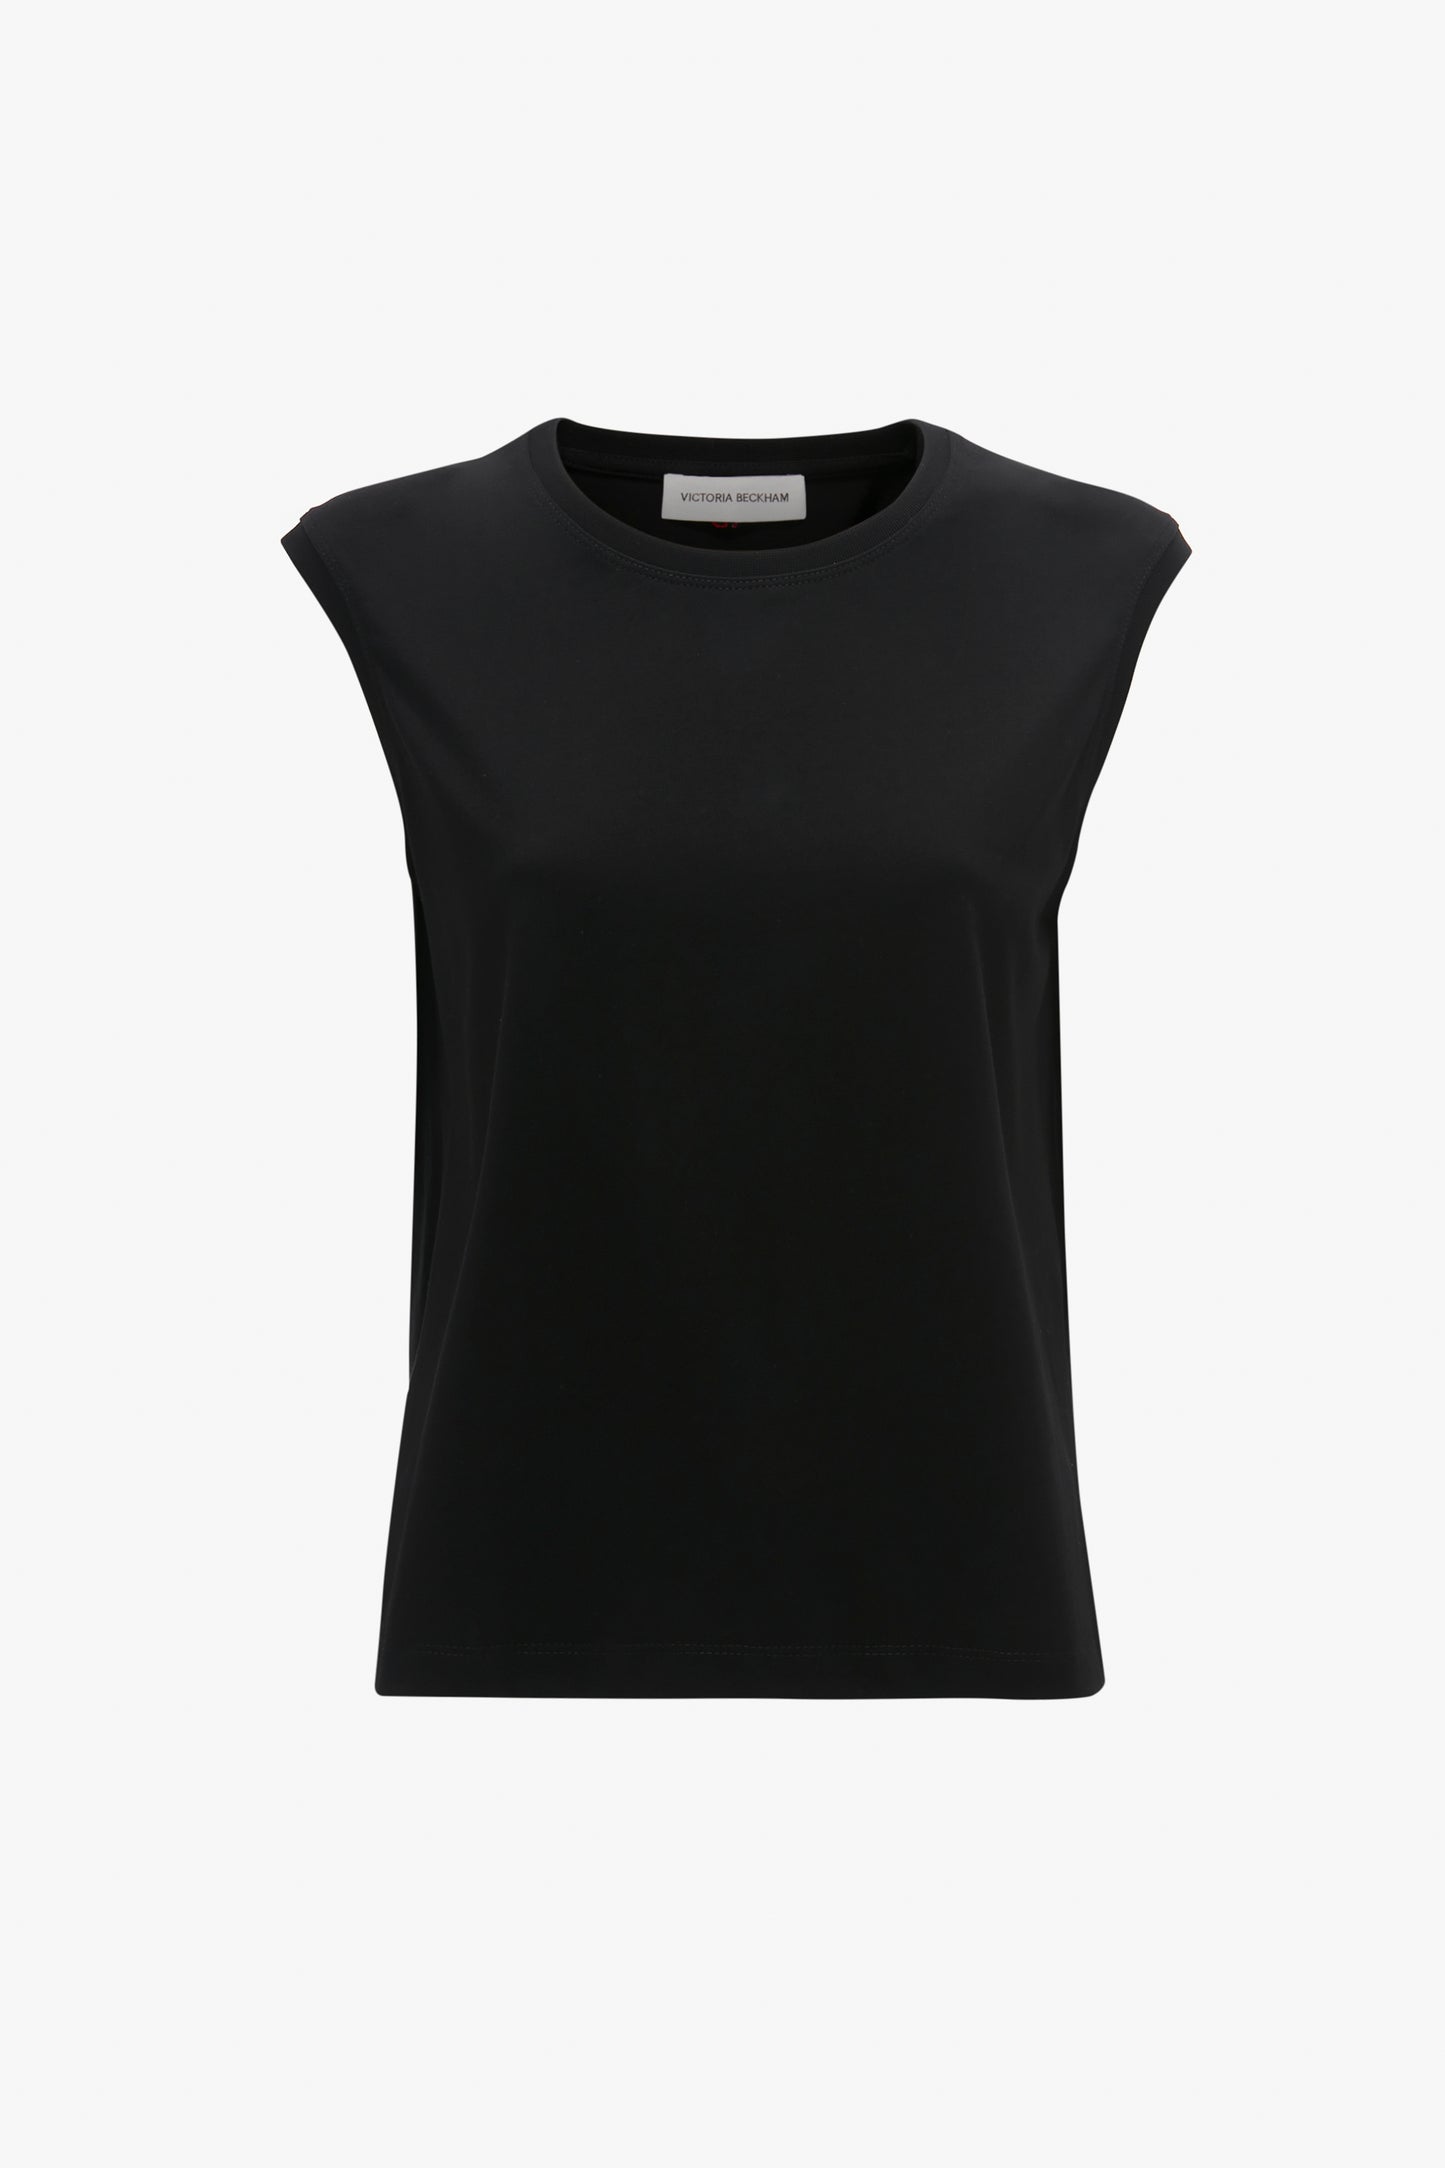 Victoria Beckham's black organic cotton Sleeveless T-Shirt on a white background.